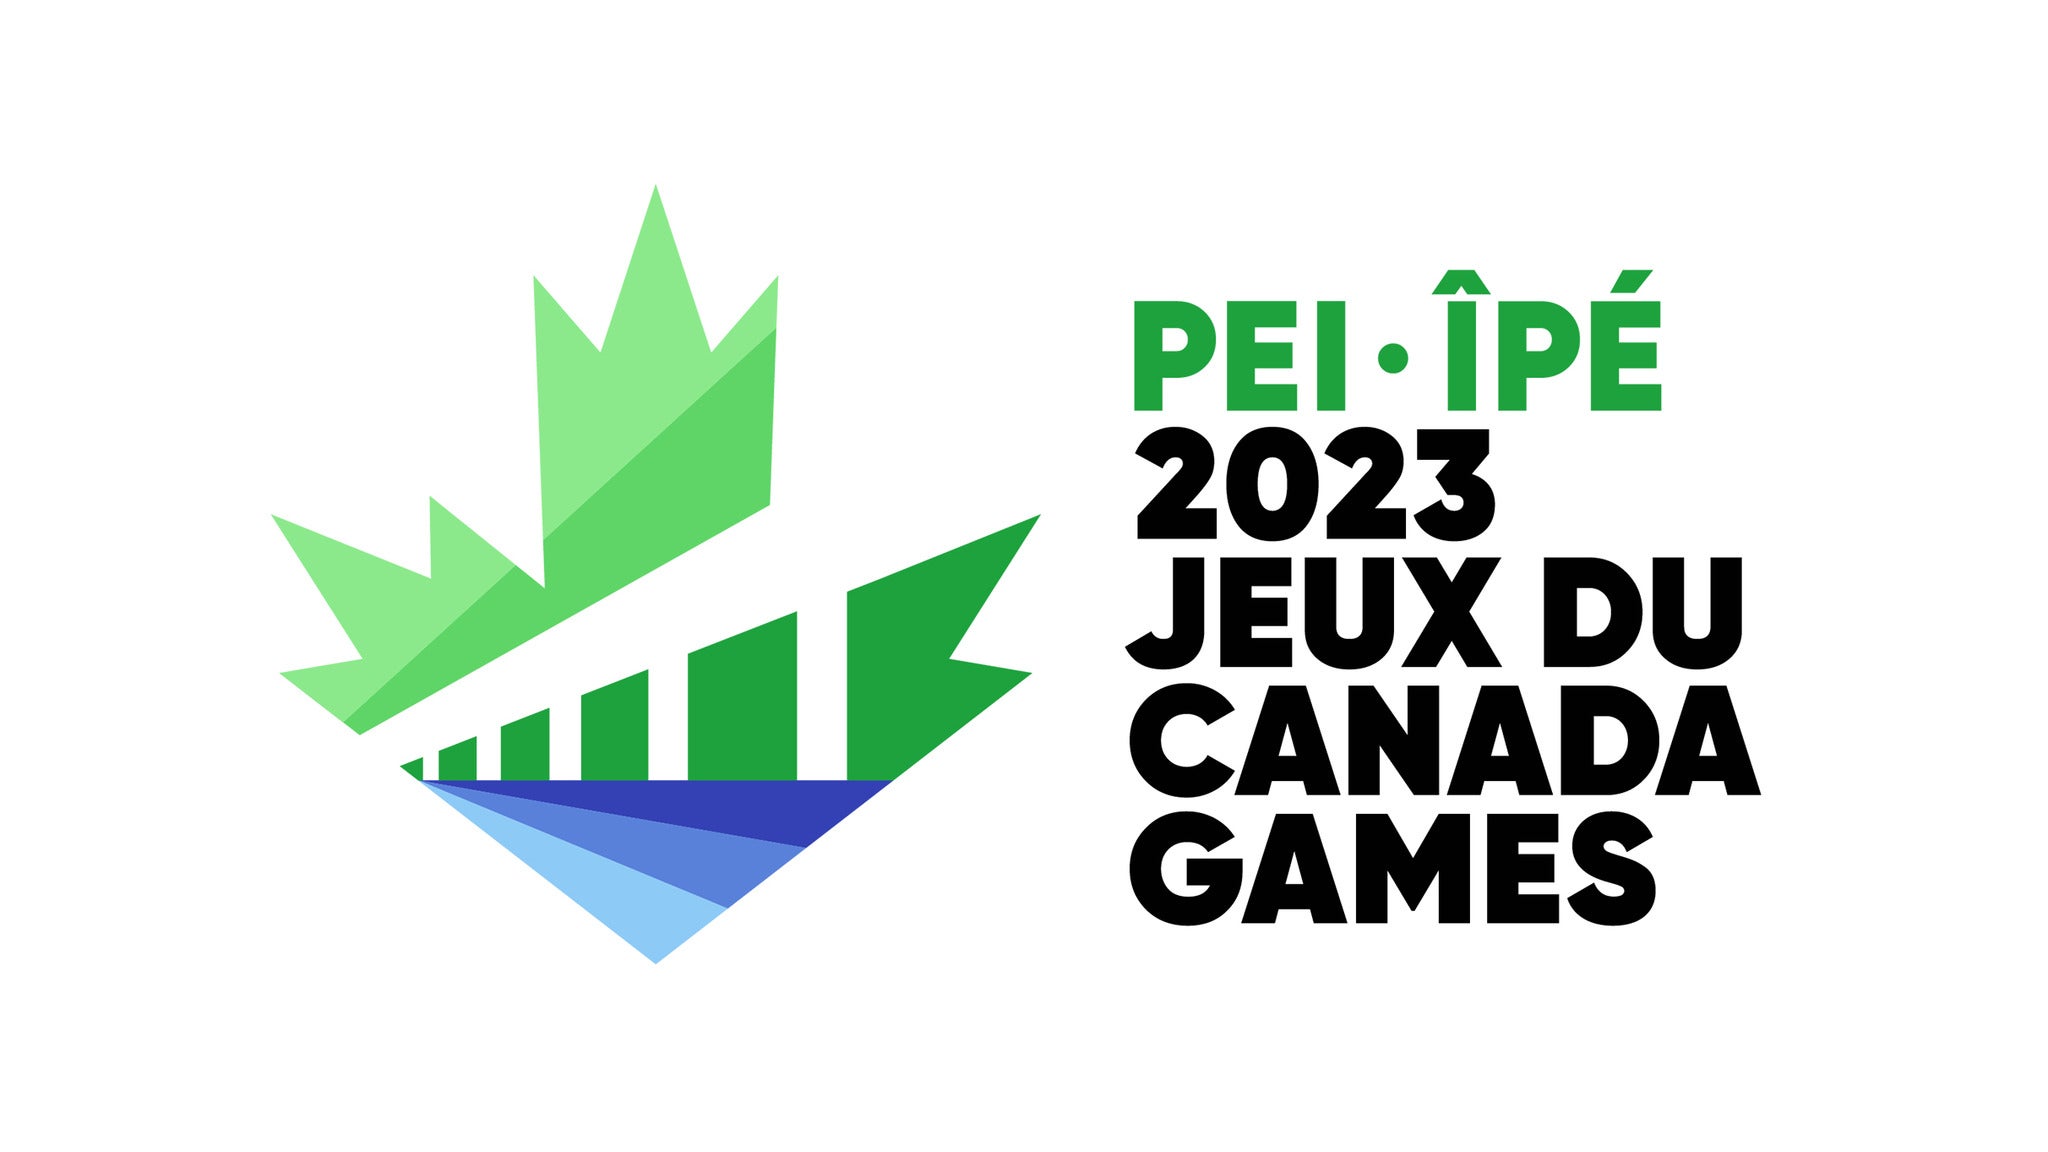 2023 Jeux du Canada Games - Feb 24 Single Day Pass / Billet De Journée in Summerside promo photo for Offer presale offer code